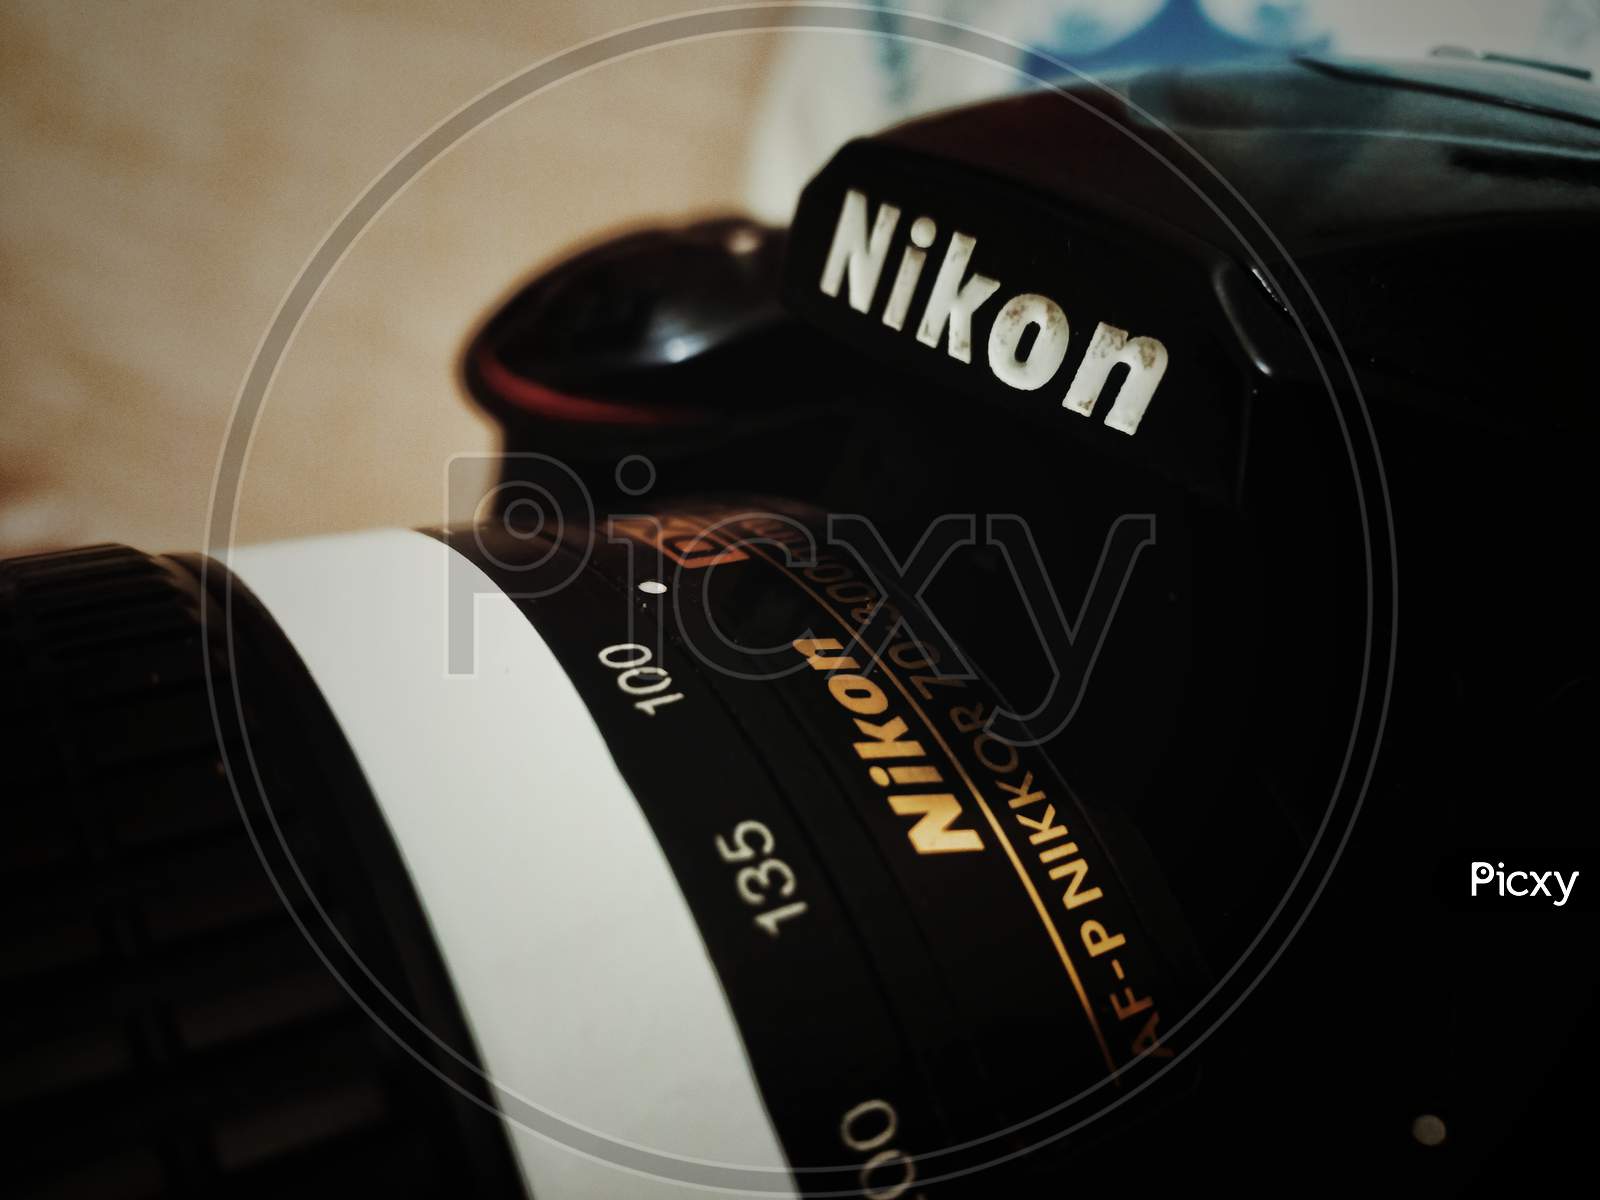 Nikon cam